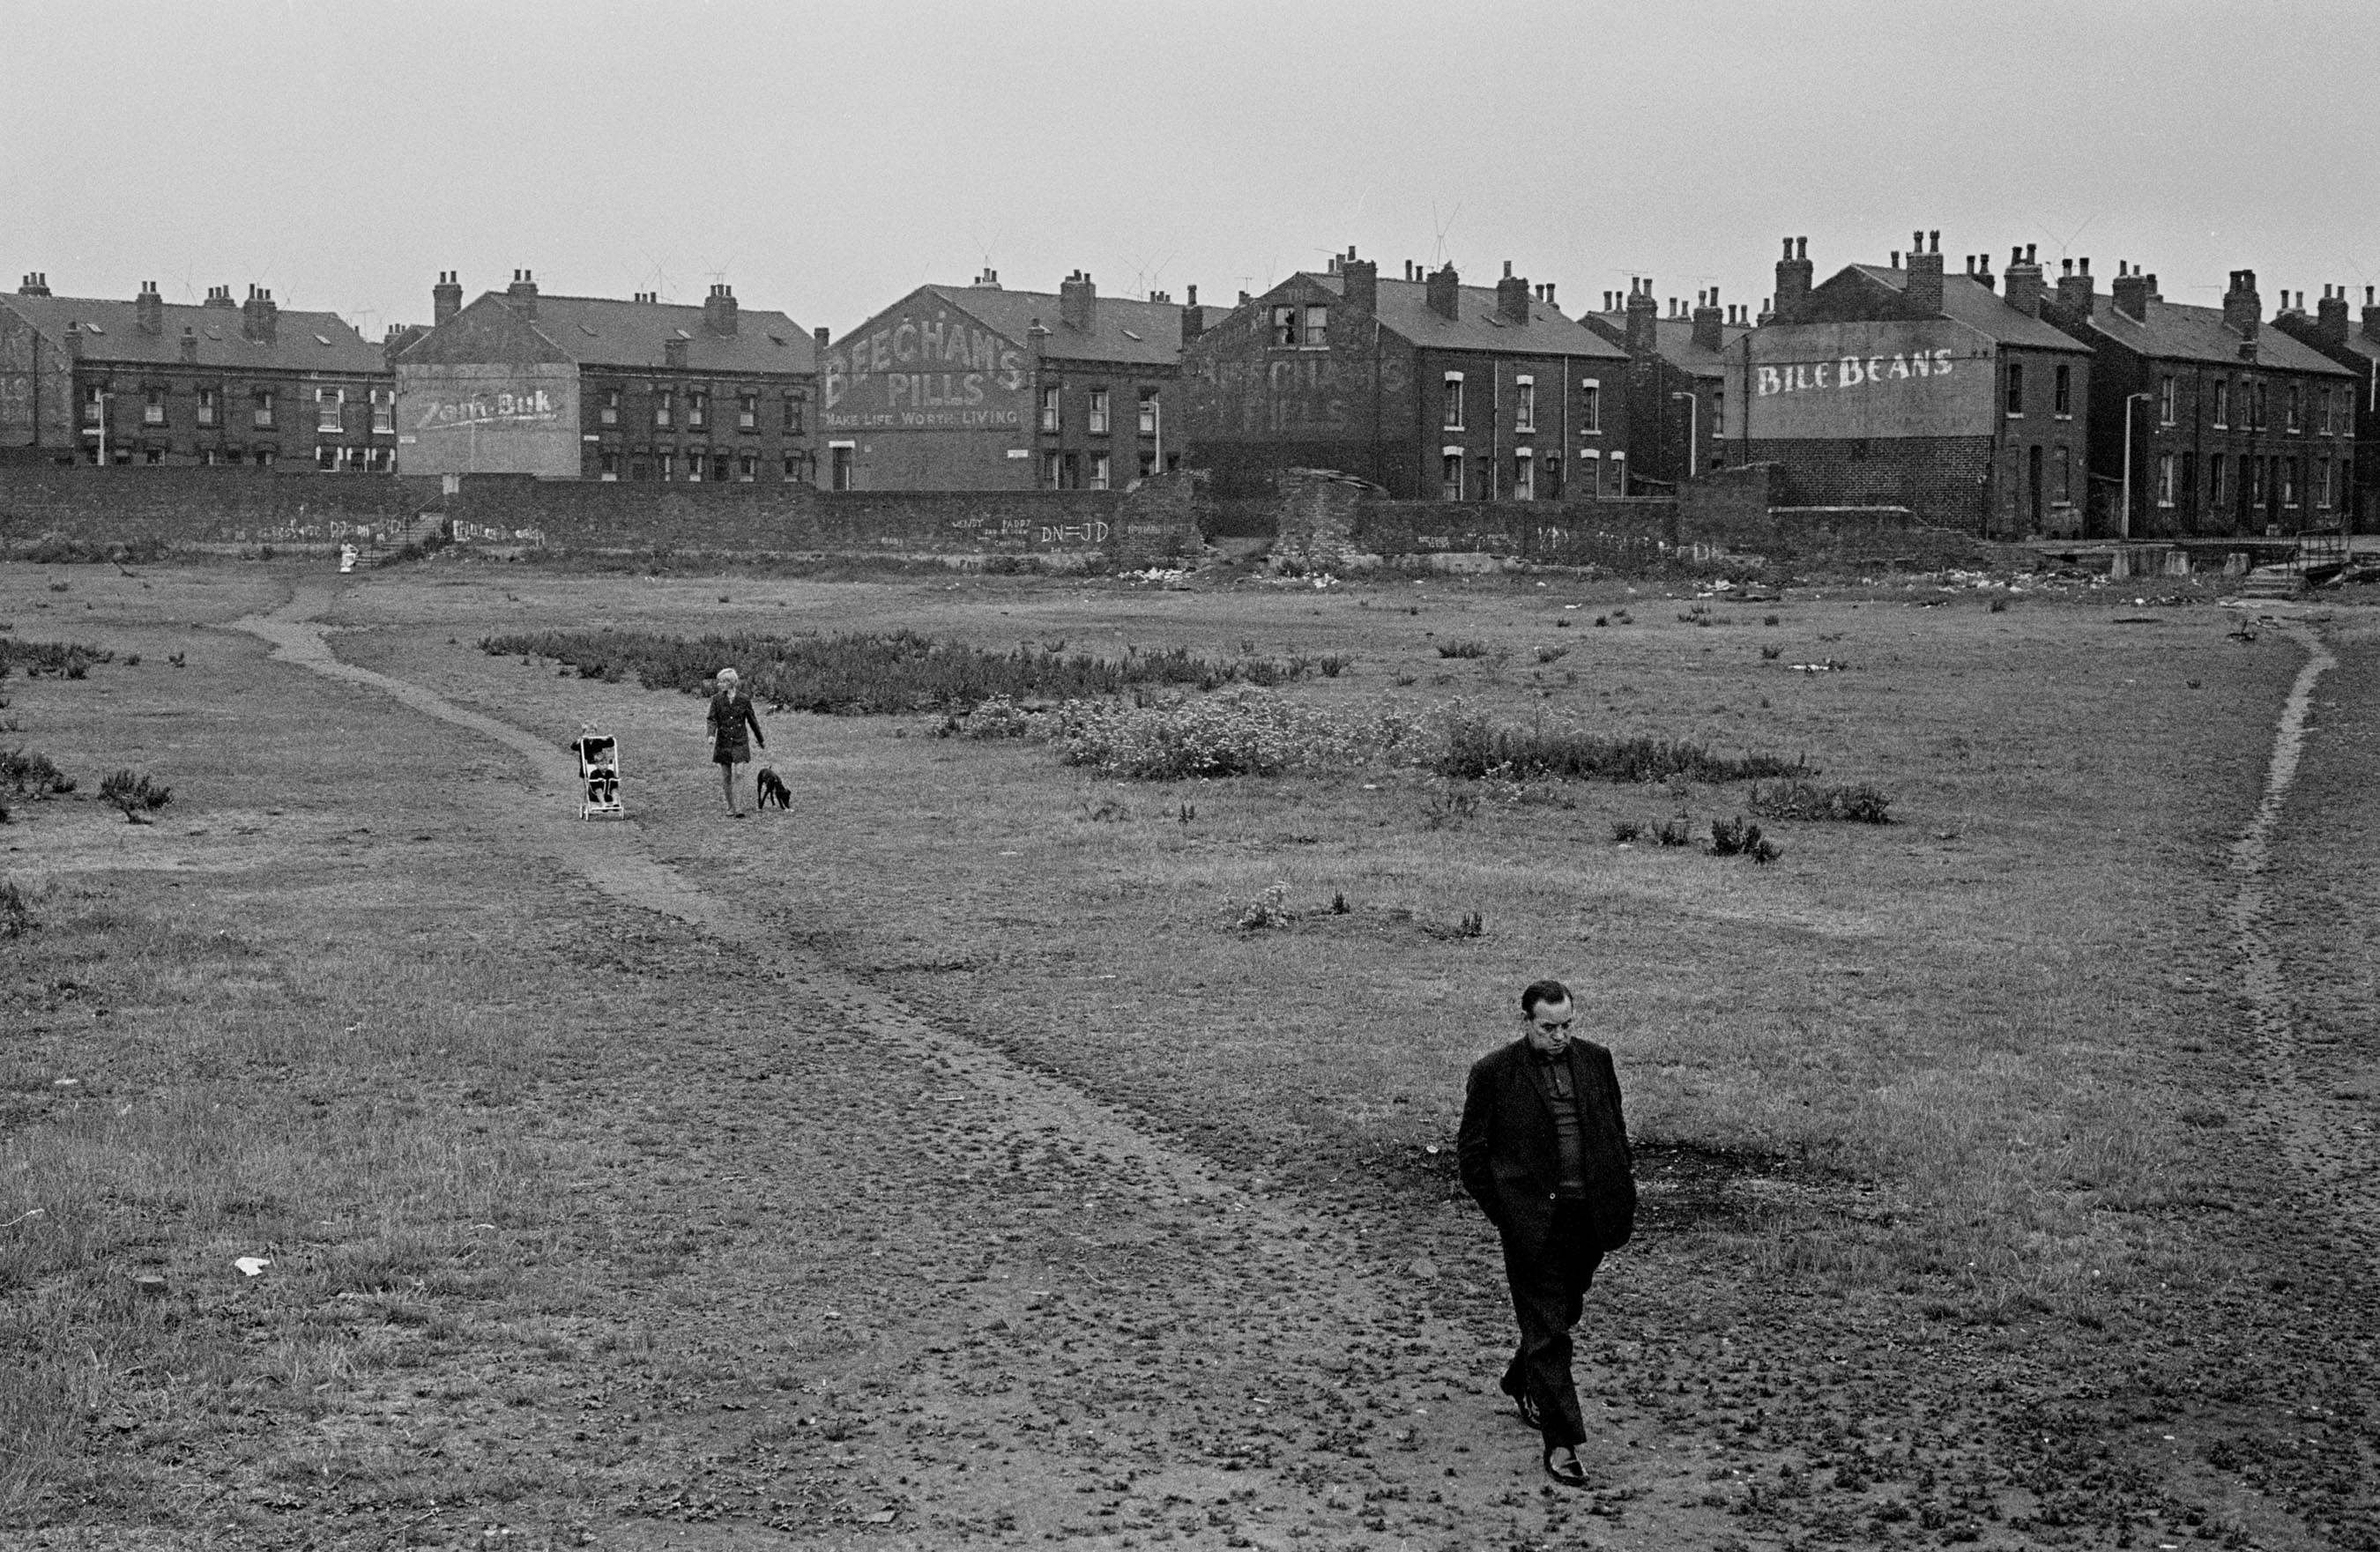 Crossing-wasteland-from-back-to-back-housing-towards-railway-line-Leeds-1970-221-28.jpg